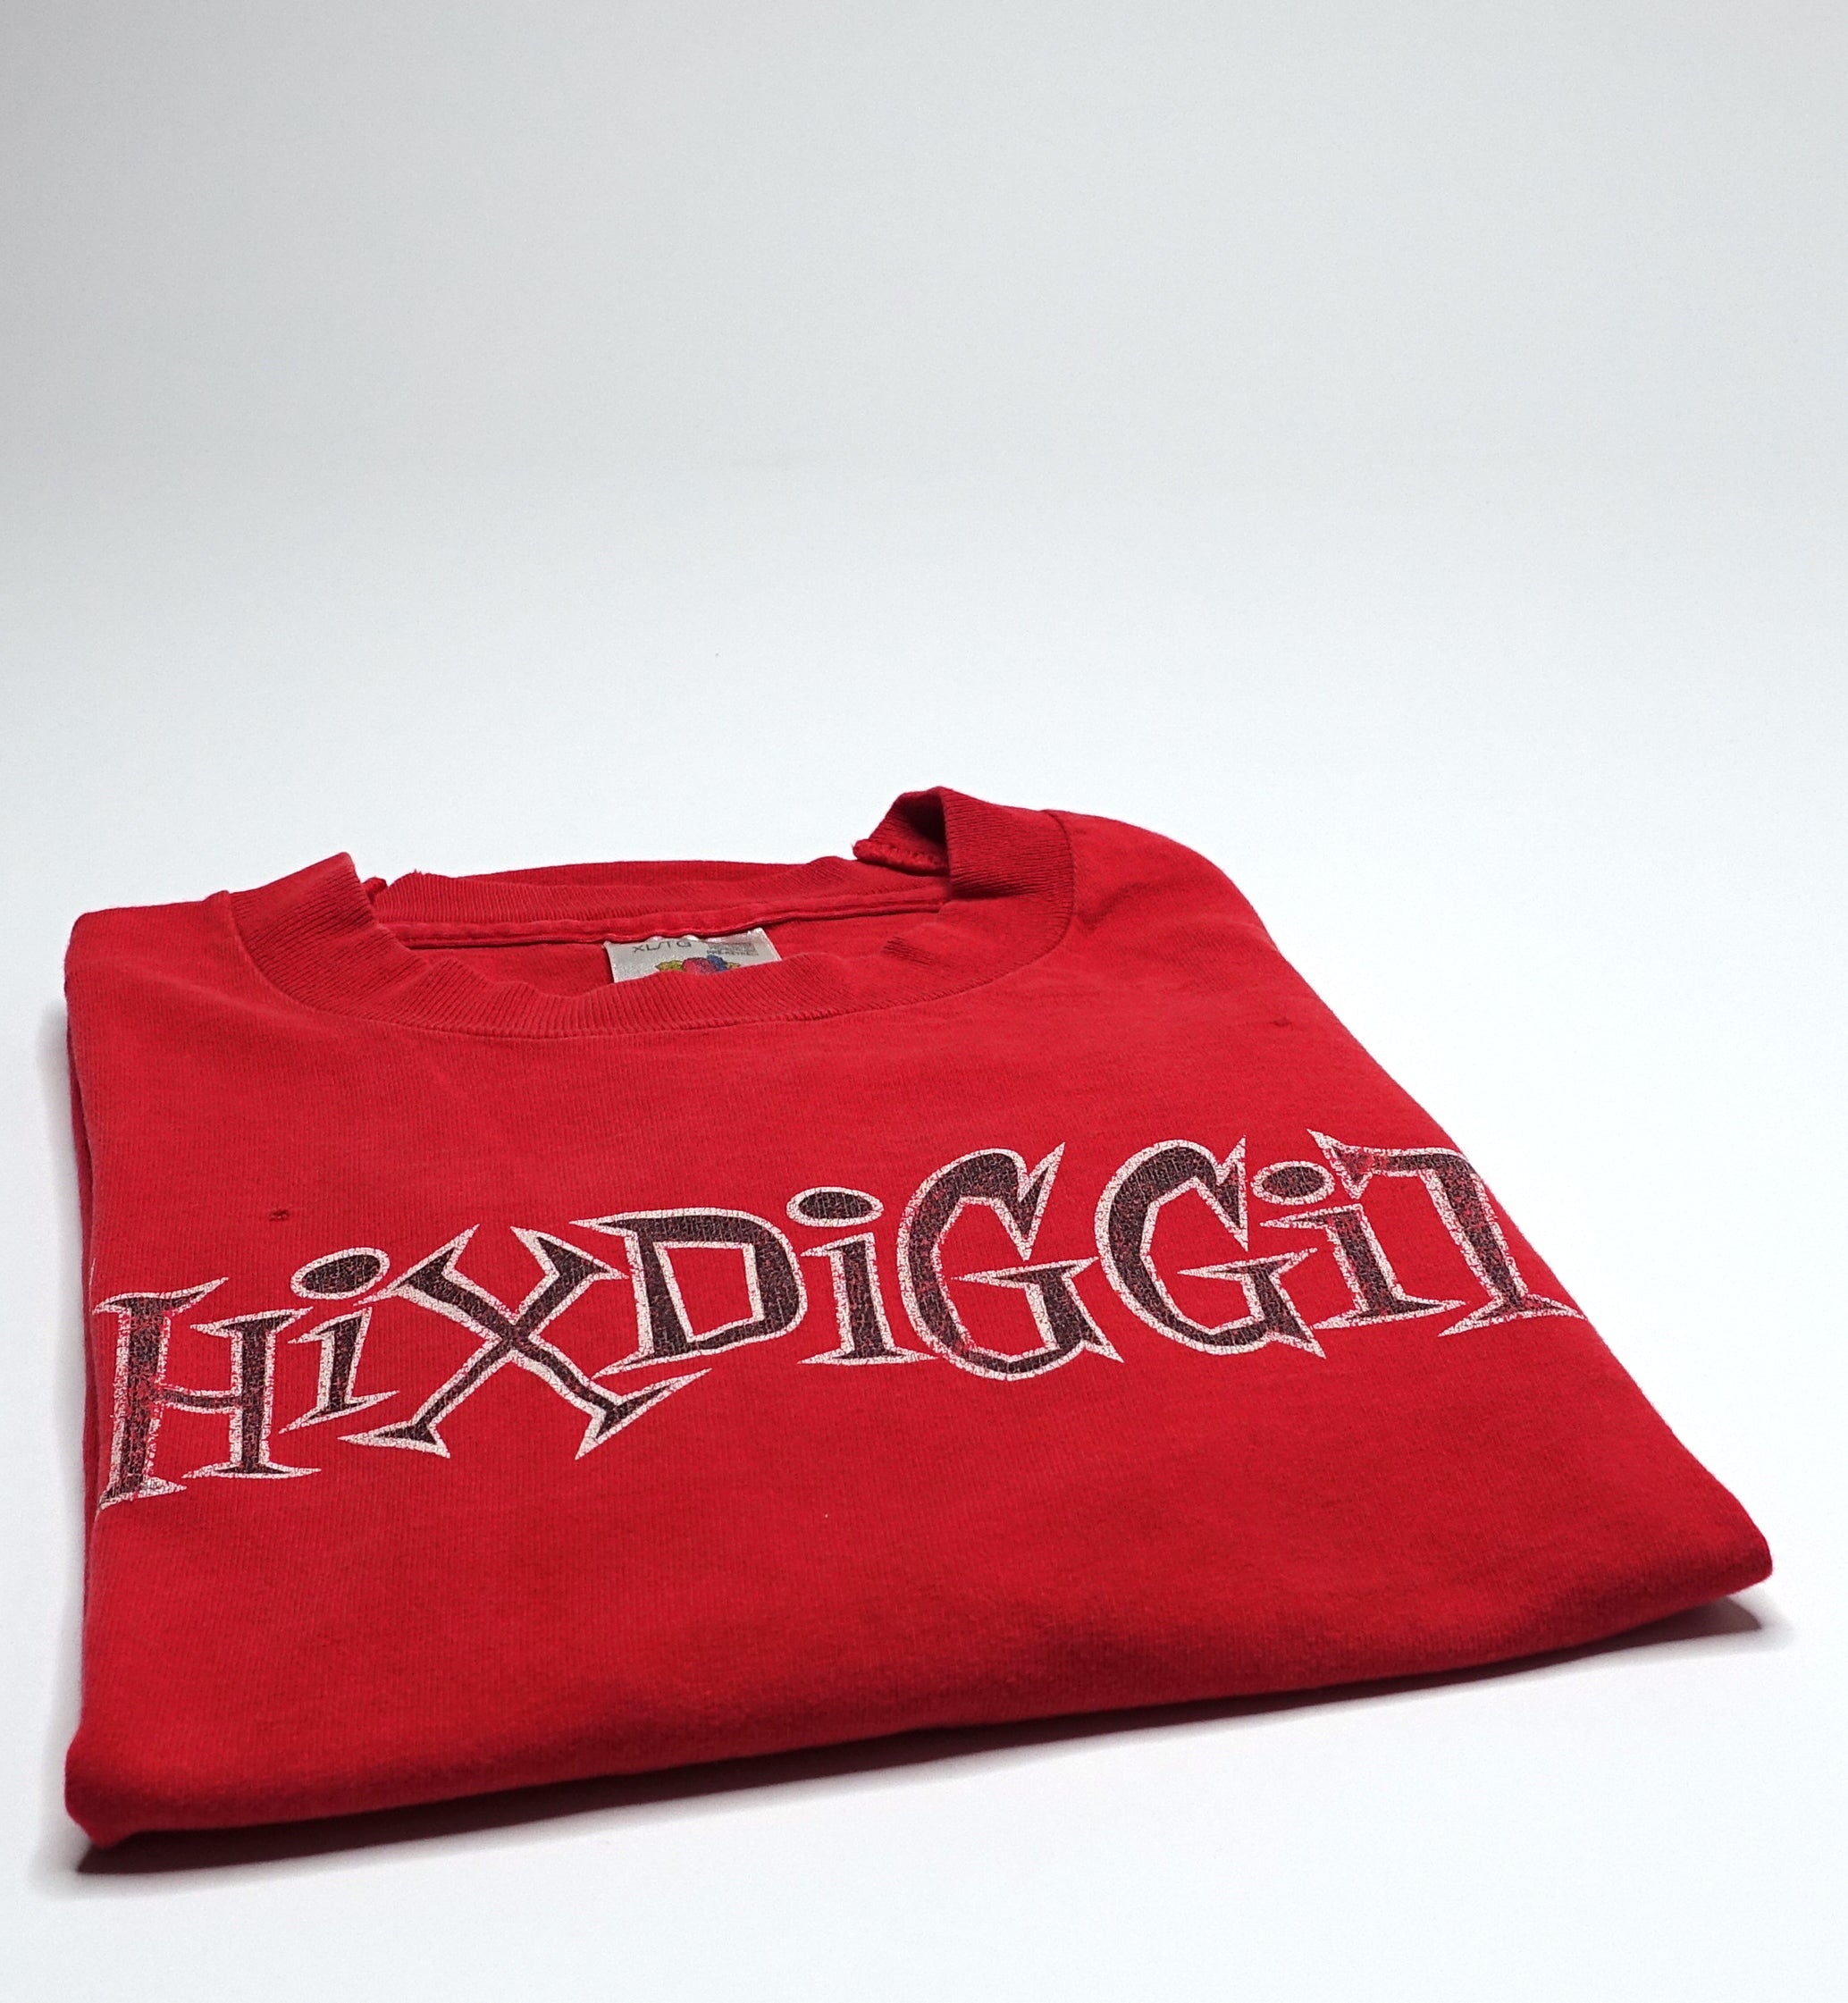 Chixdiggit! - Chixdiggit! 90's Tour Shirt (Red) Size XL